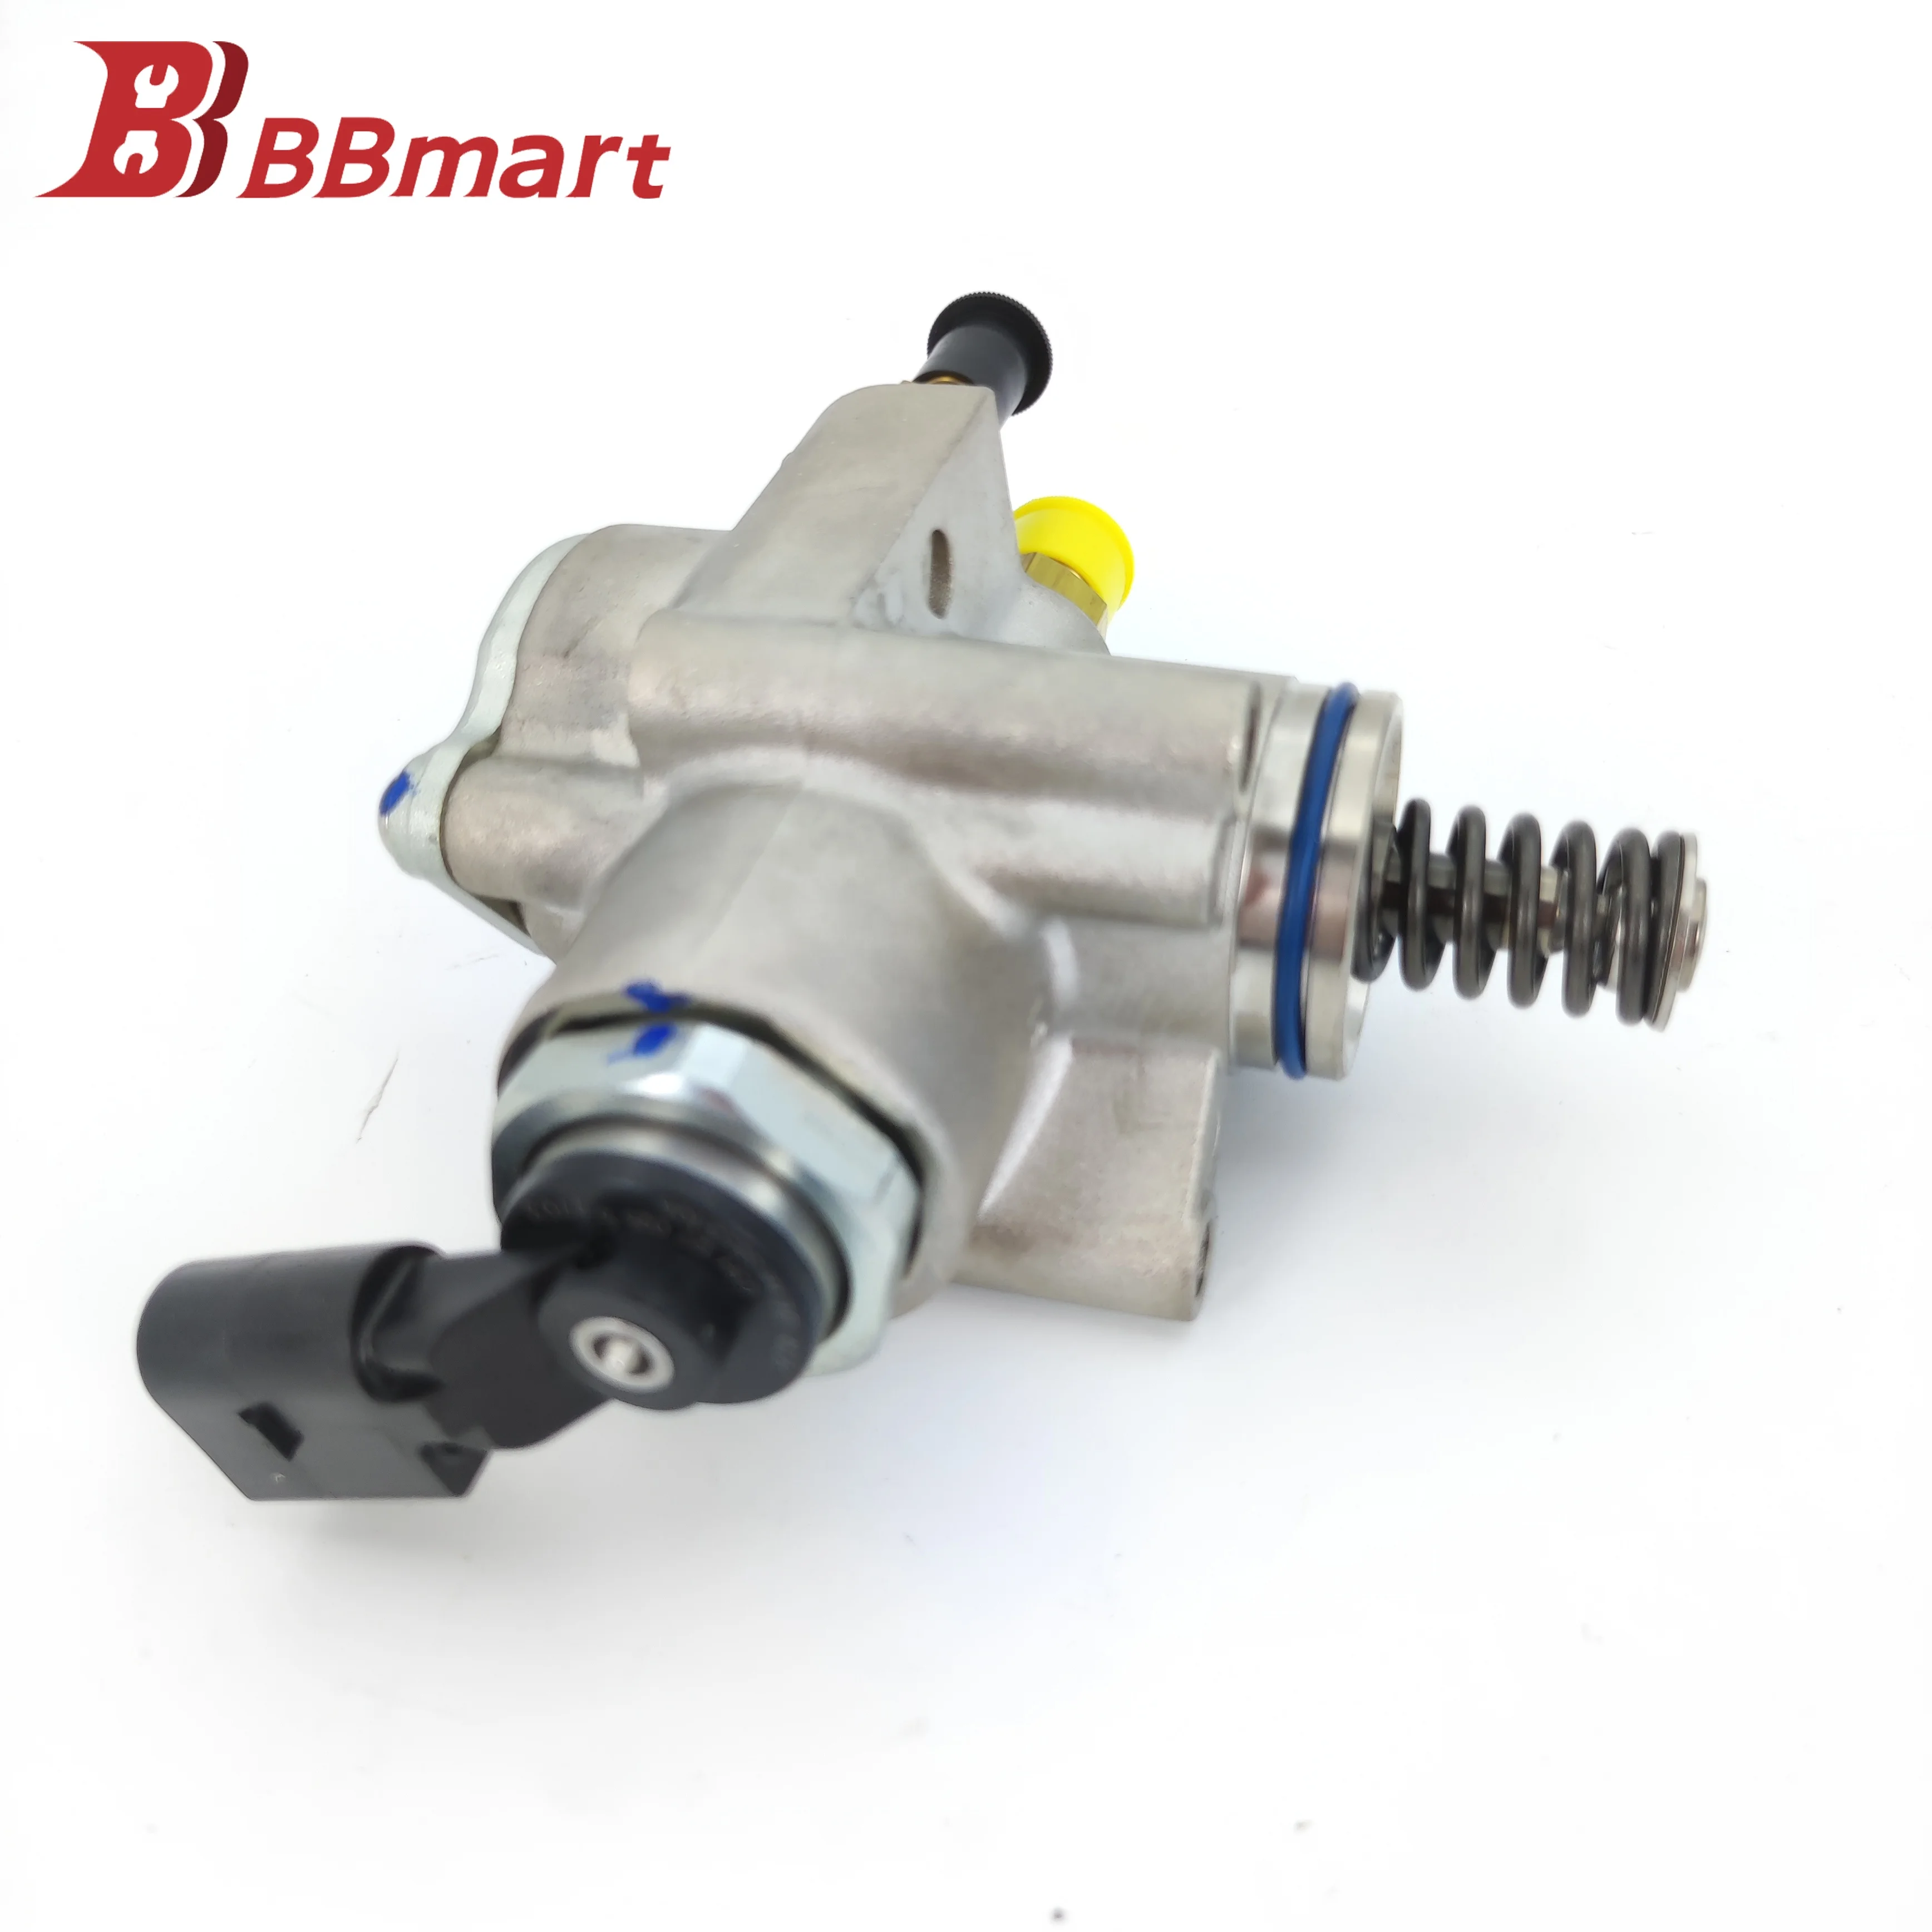 BBmart Auto Parts High Pressure Fuel Pump For VW PASSAT CC/TOUAREG/PORSCHE 7P5 7P6 357 OEM 03H127025G 03H127025S 03H127025R